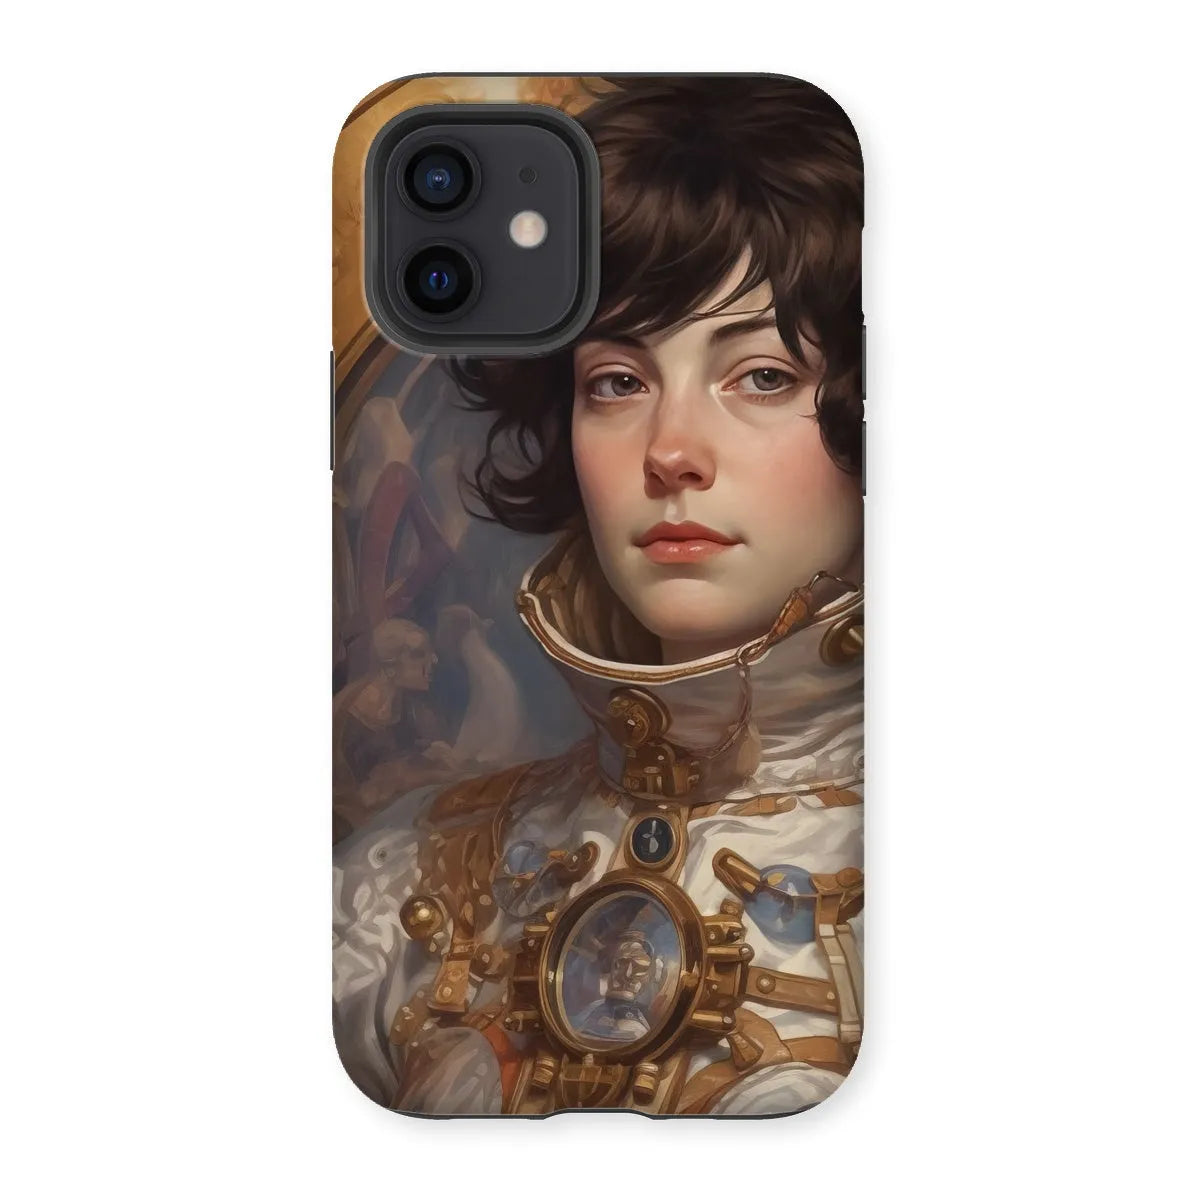 Chloé The Lesbian Astronaut - Space Aesthetic Art Phone Case - Iphone 12 / Matte - Mobile Phone Cases - Aesthetic Art